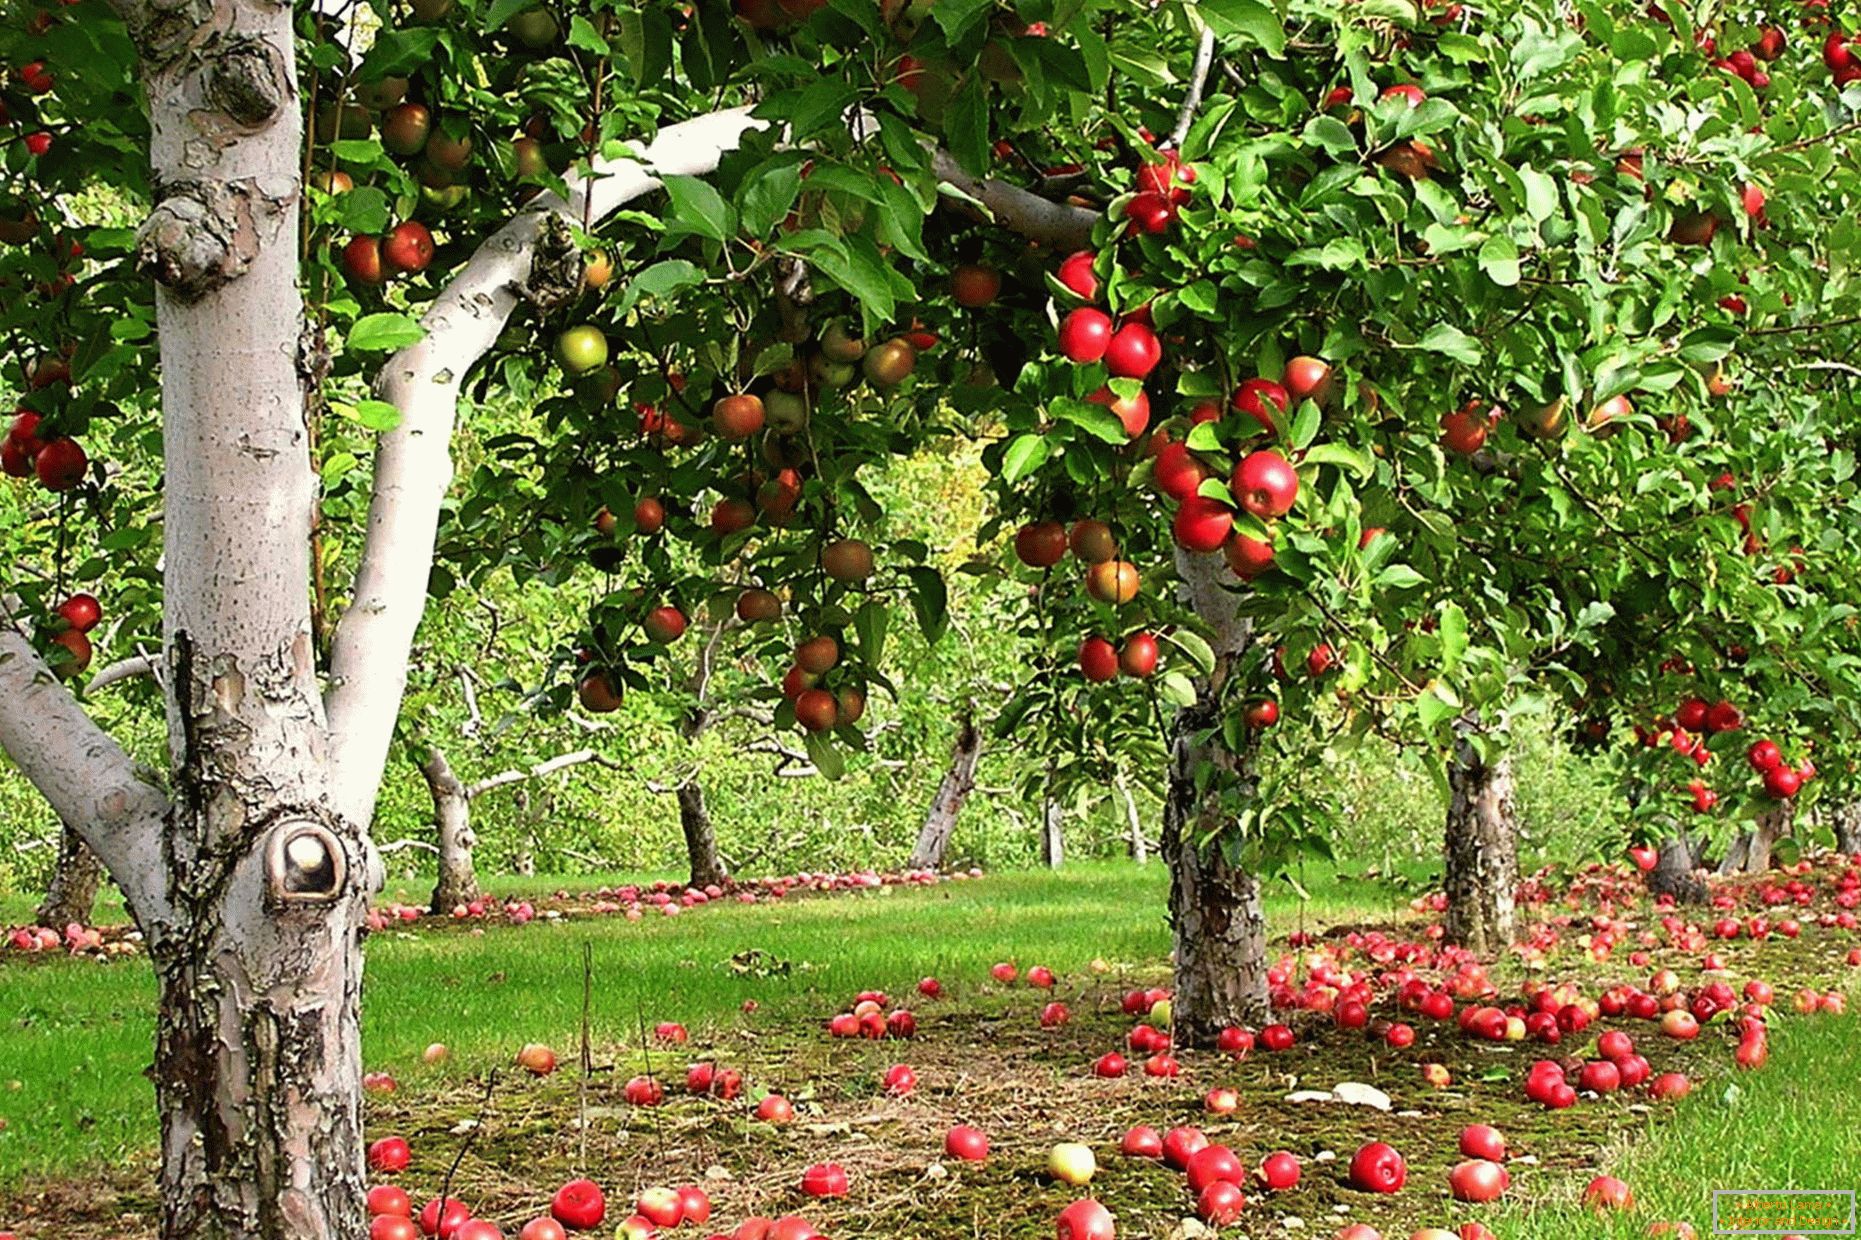 Apple-strom záhrada v krajine